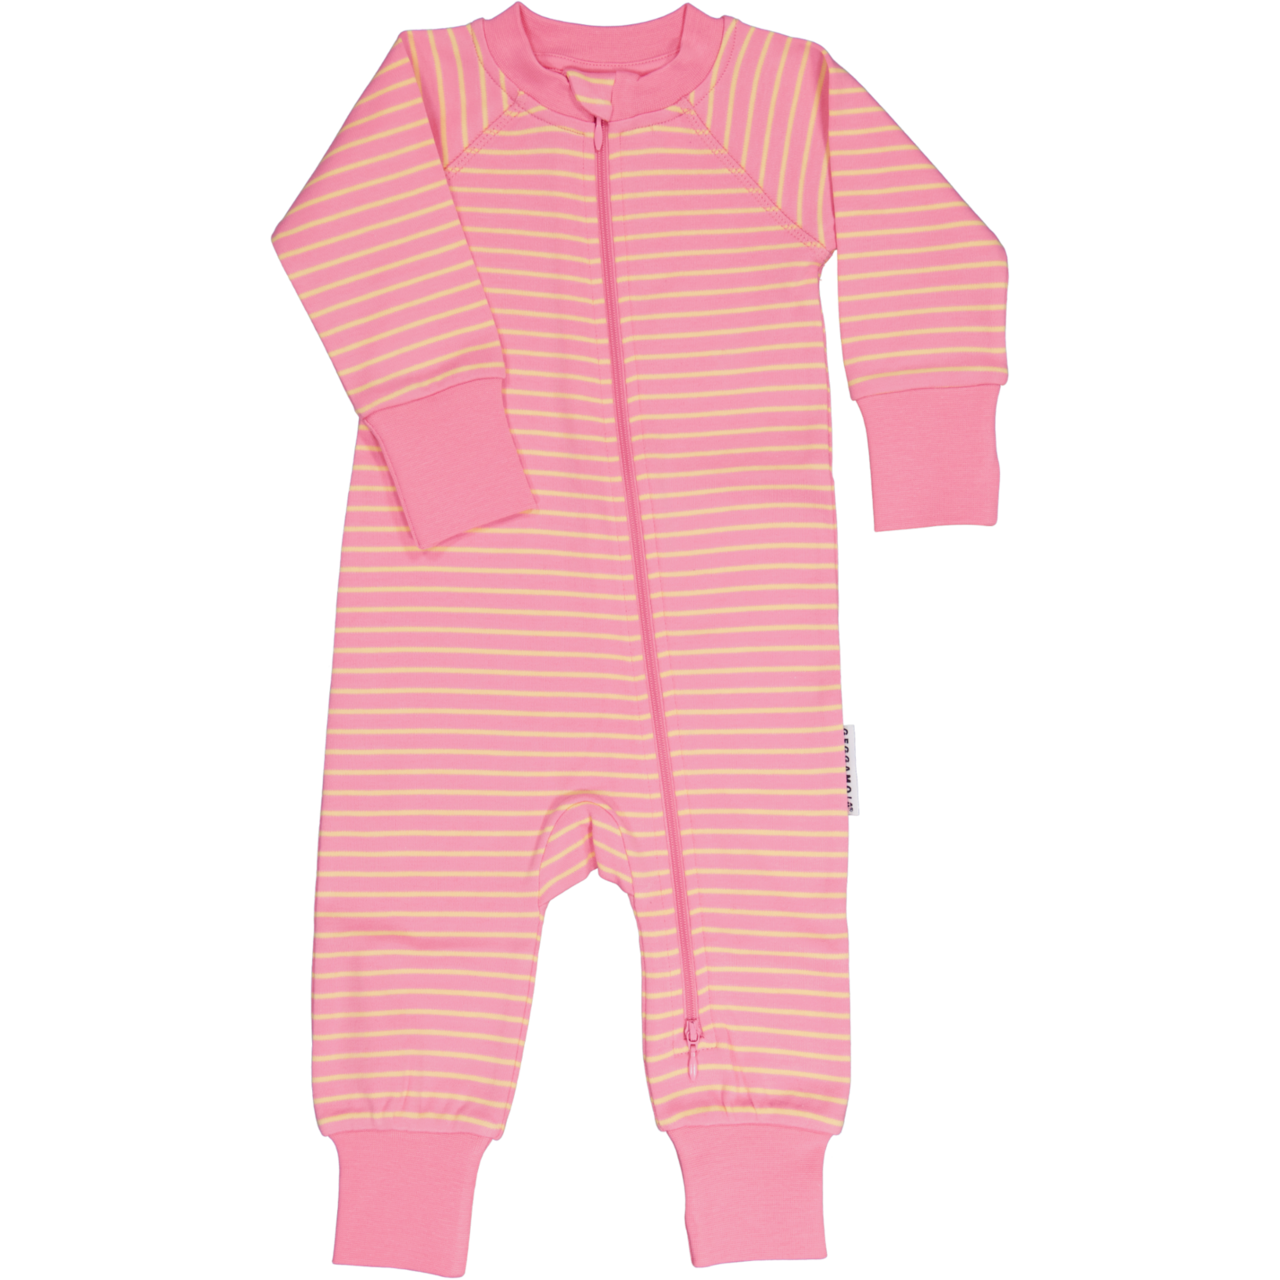 Pyjamas heldräktRosa/gul  62/68